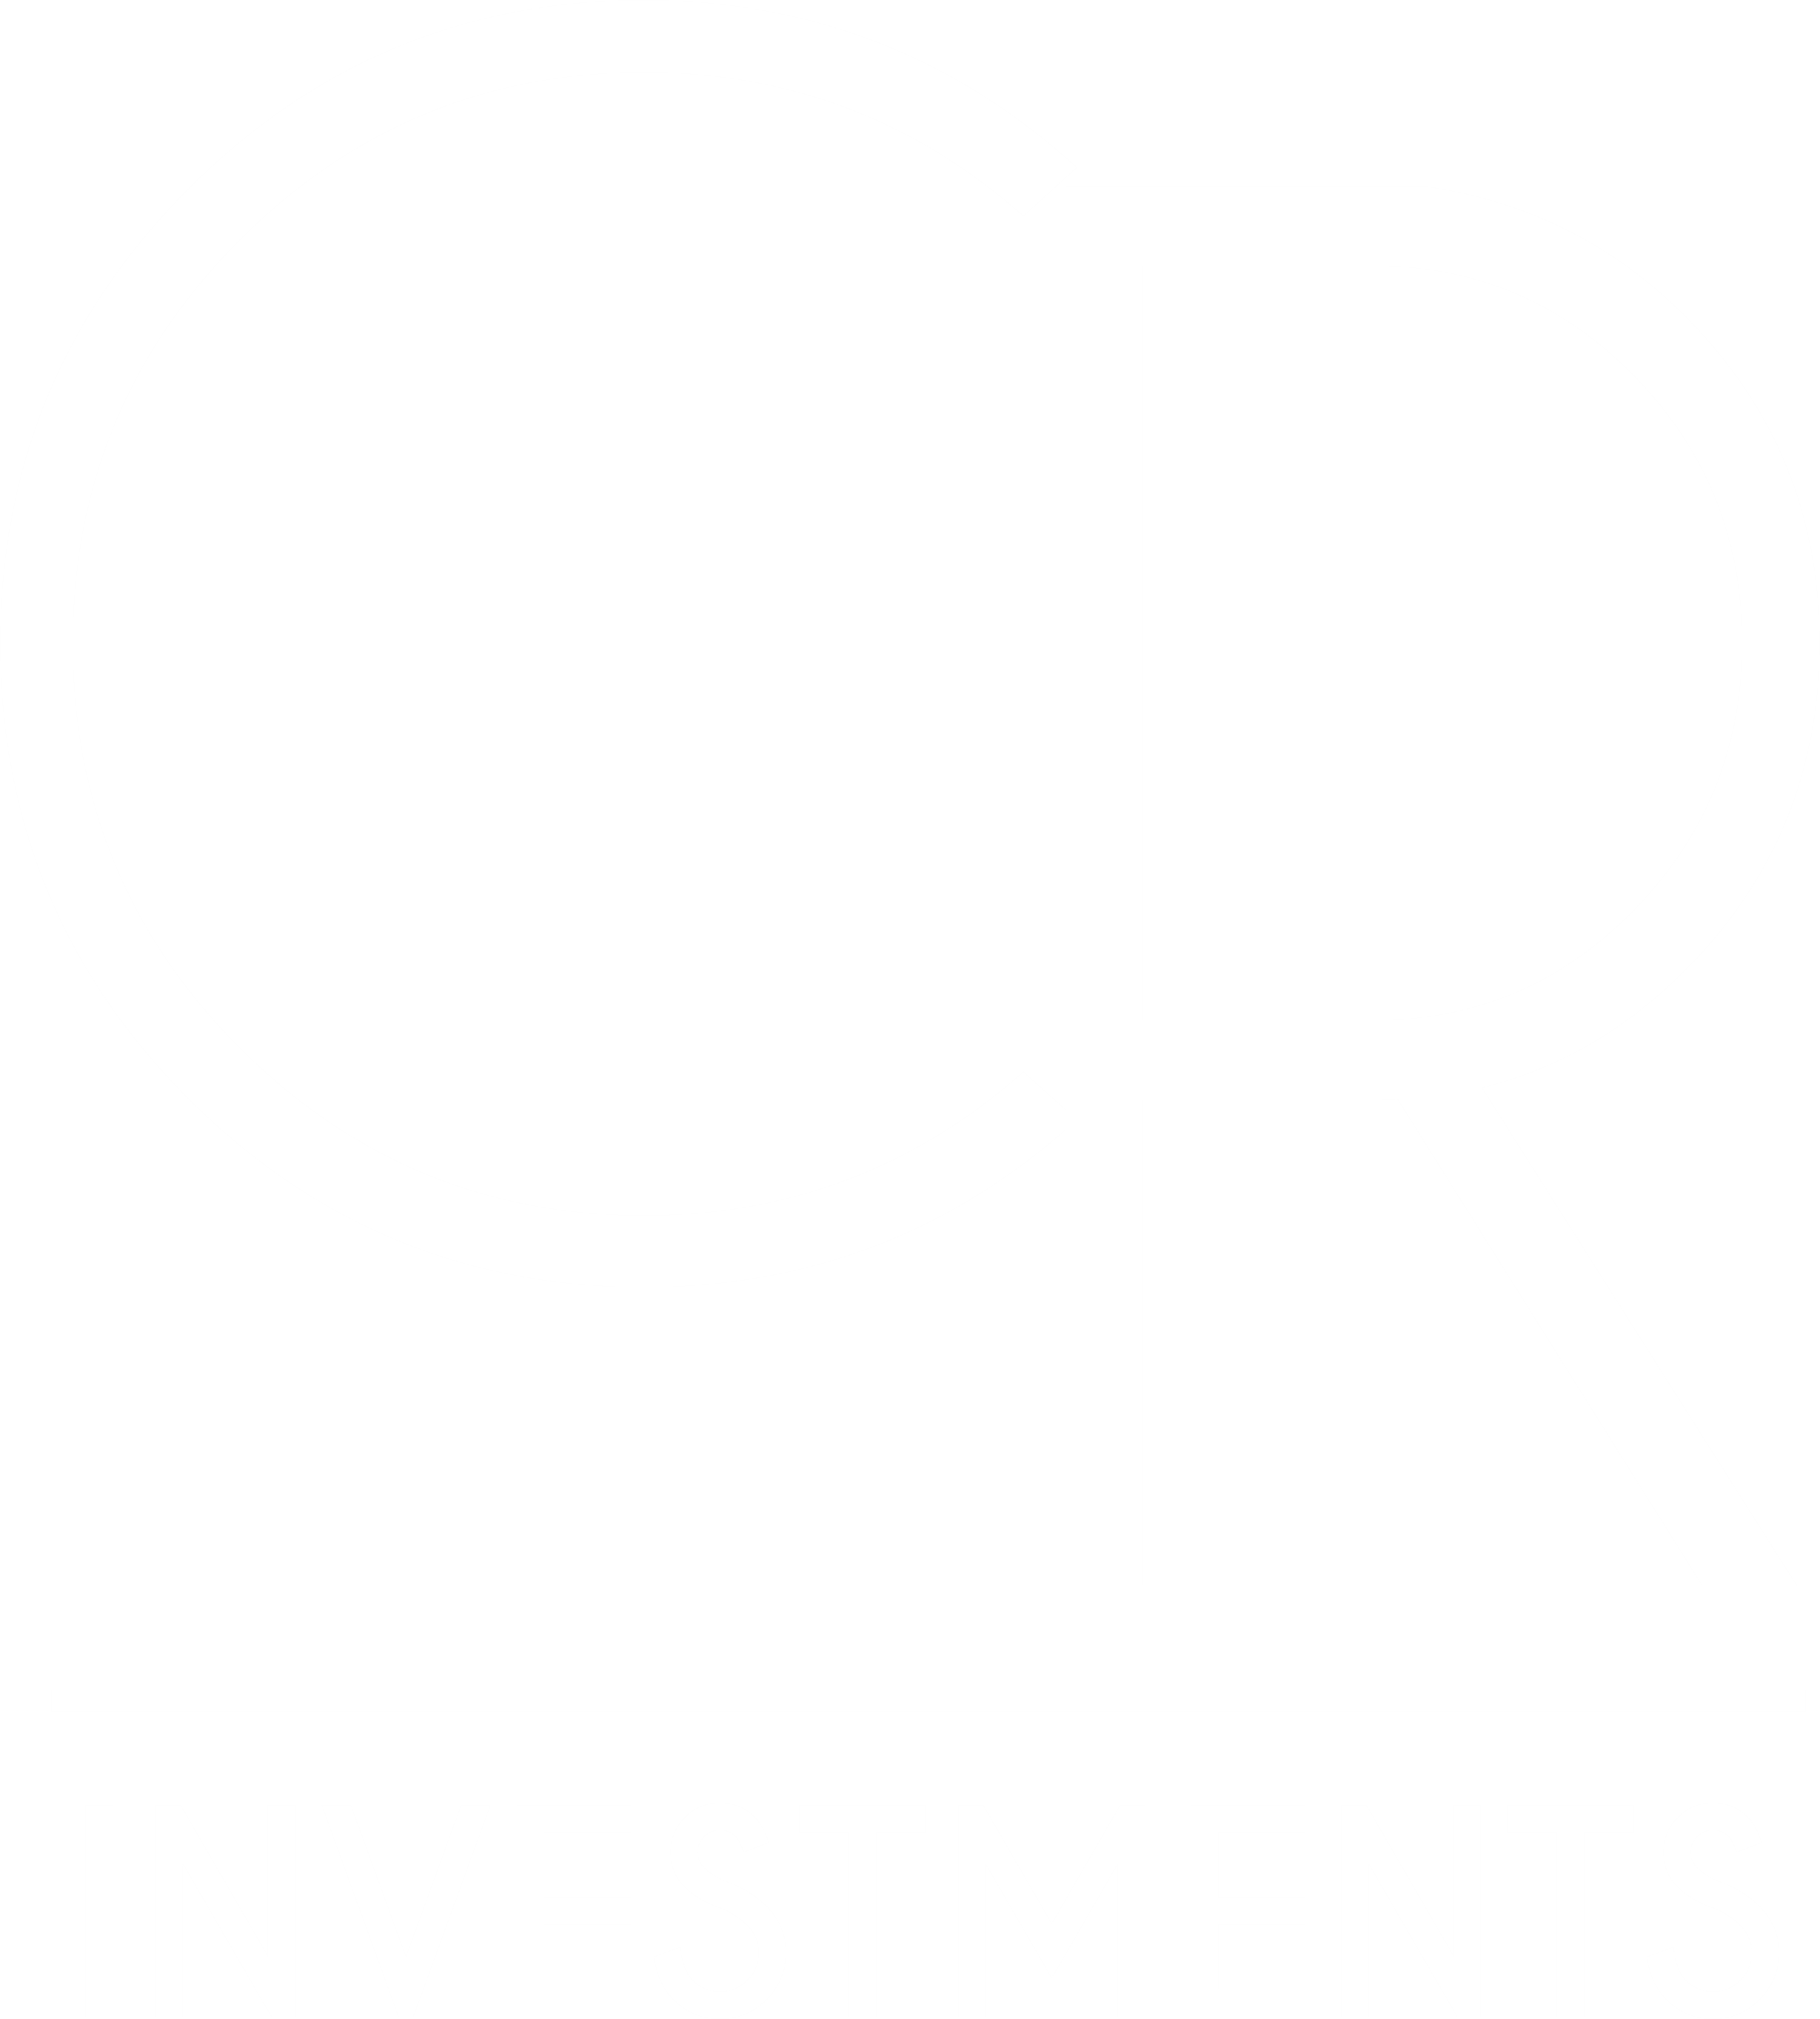 logo CR bile pruhledne